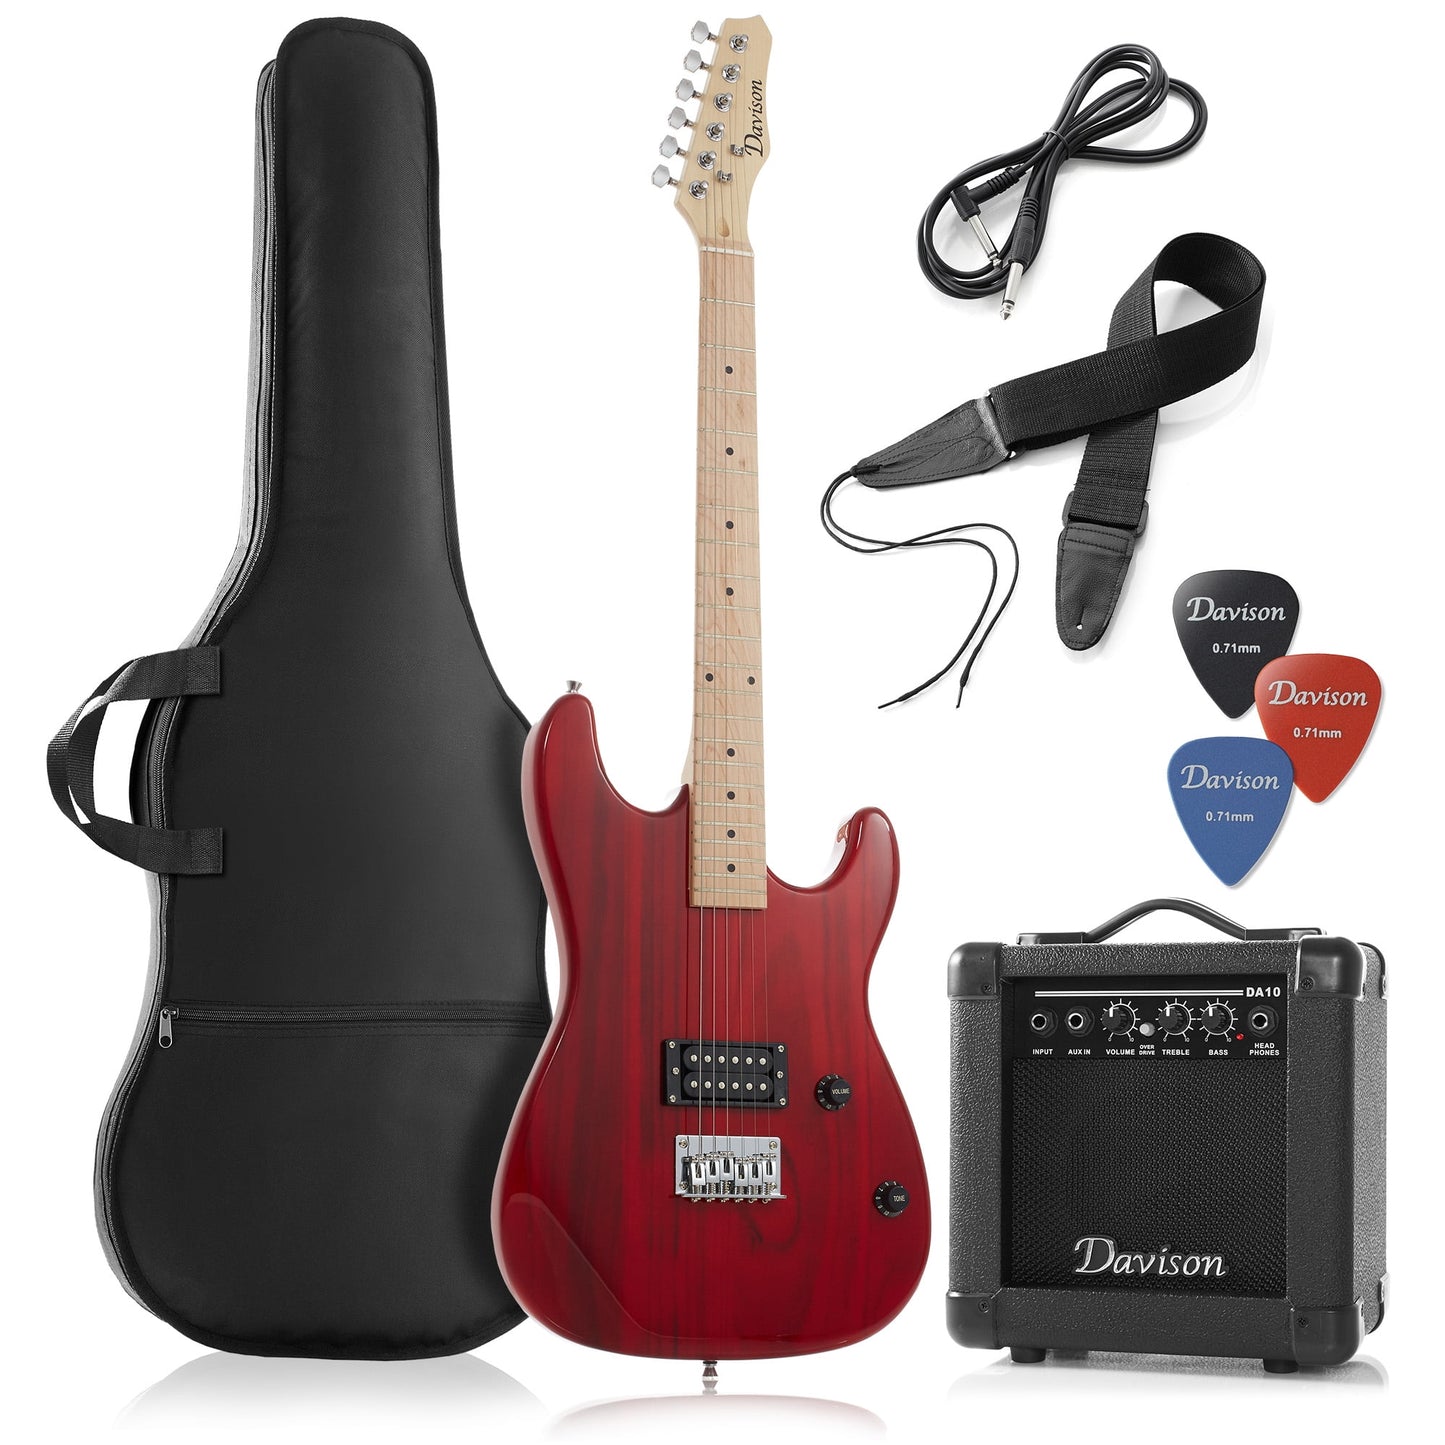 Davison 39-Inch Full-Size Electric Guitar with 10-Watt Amplifier, Red